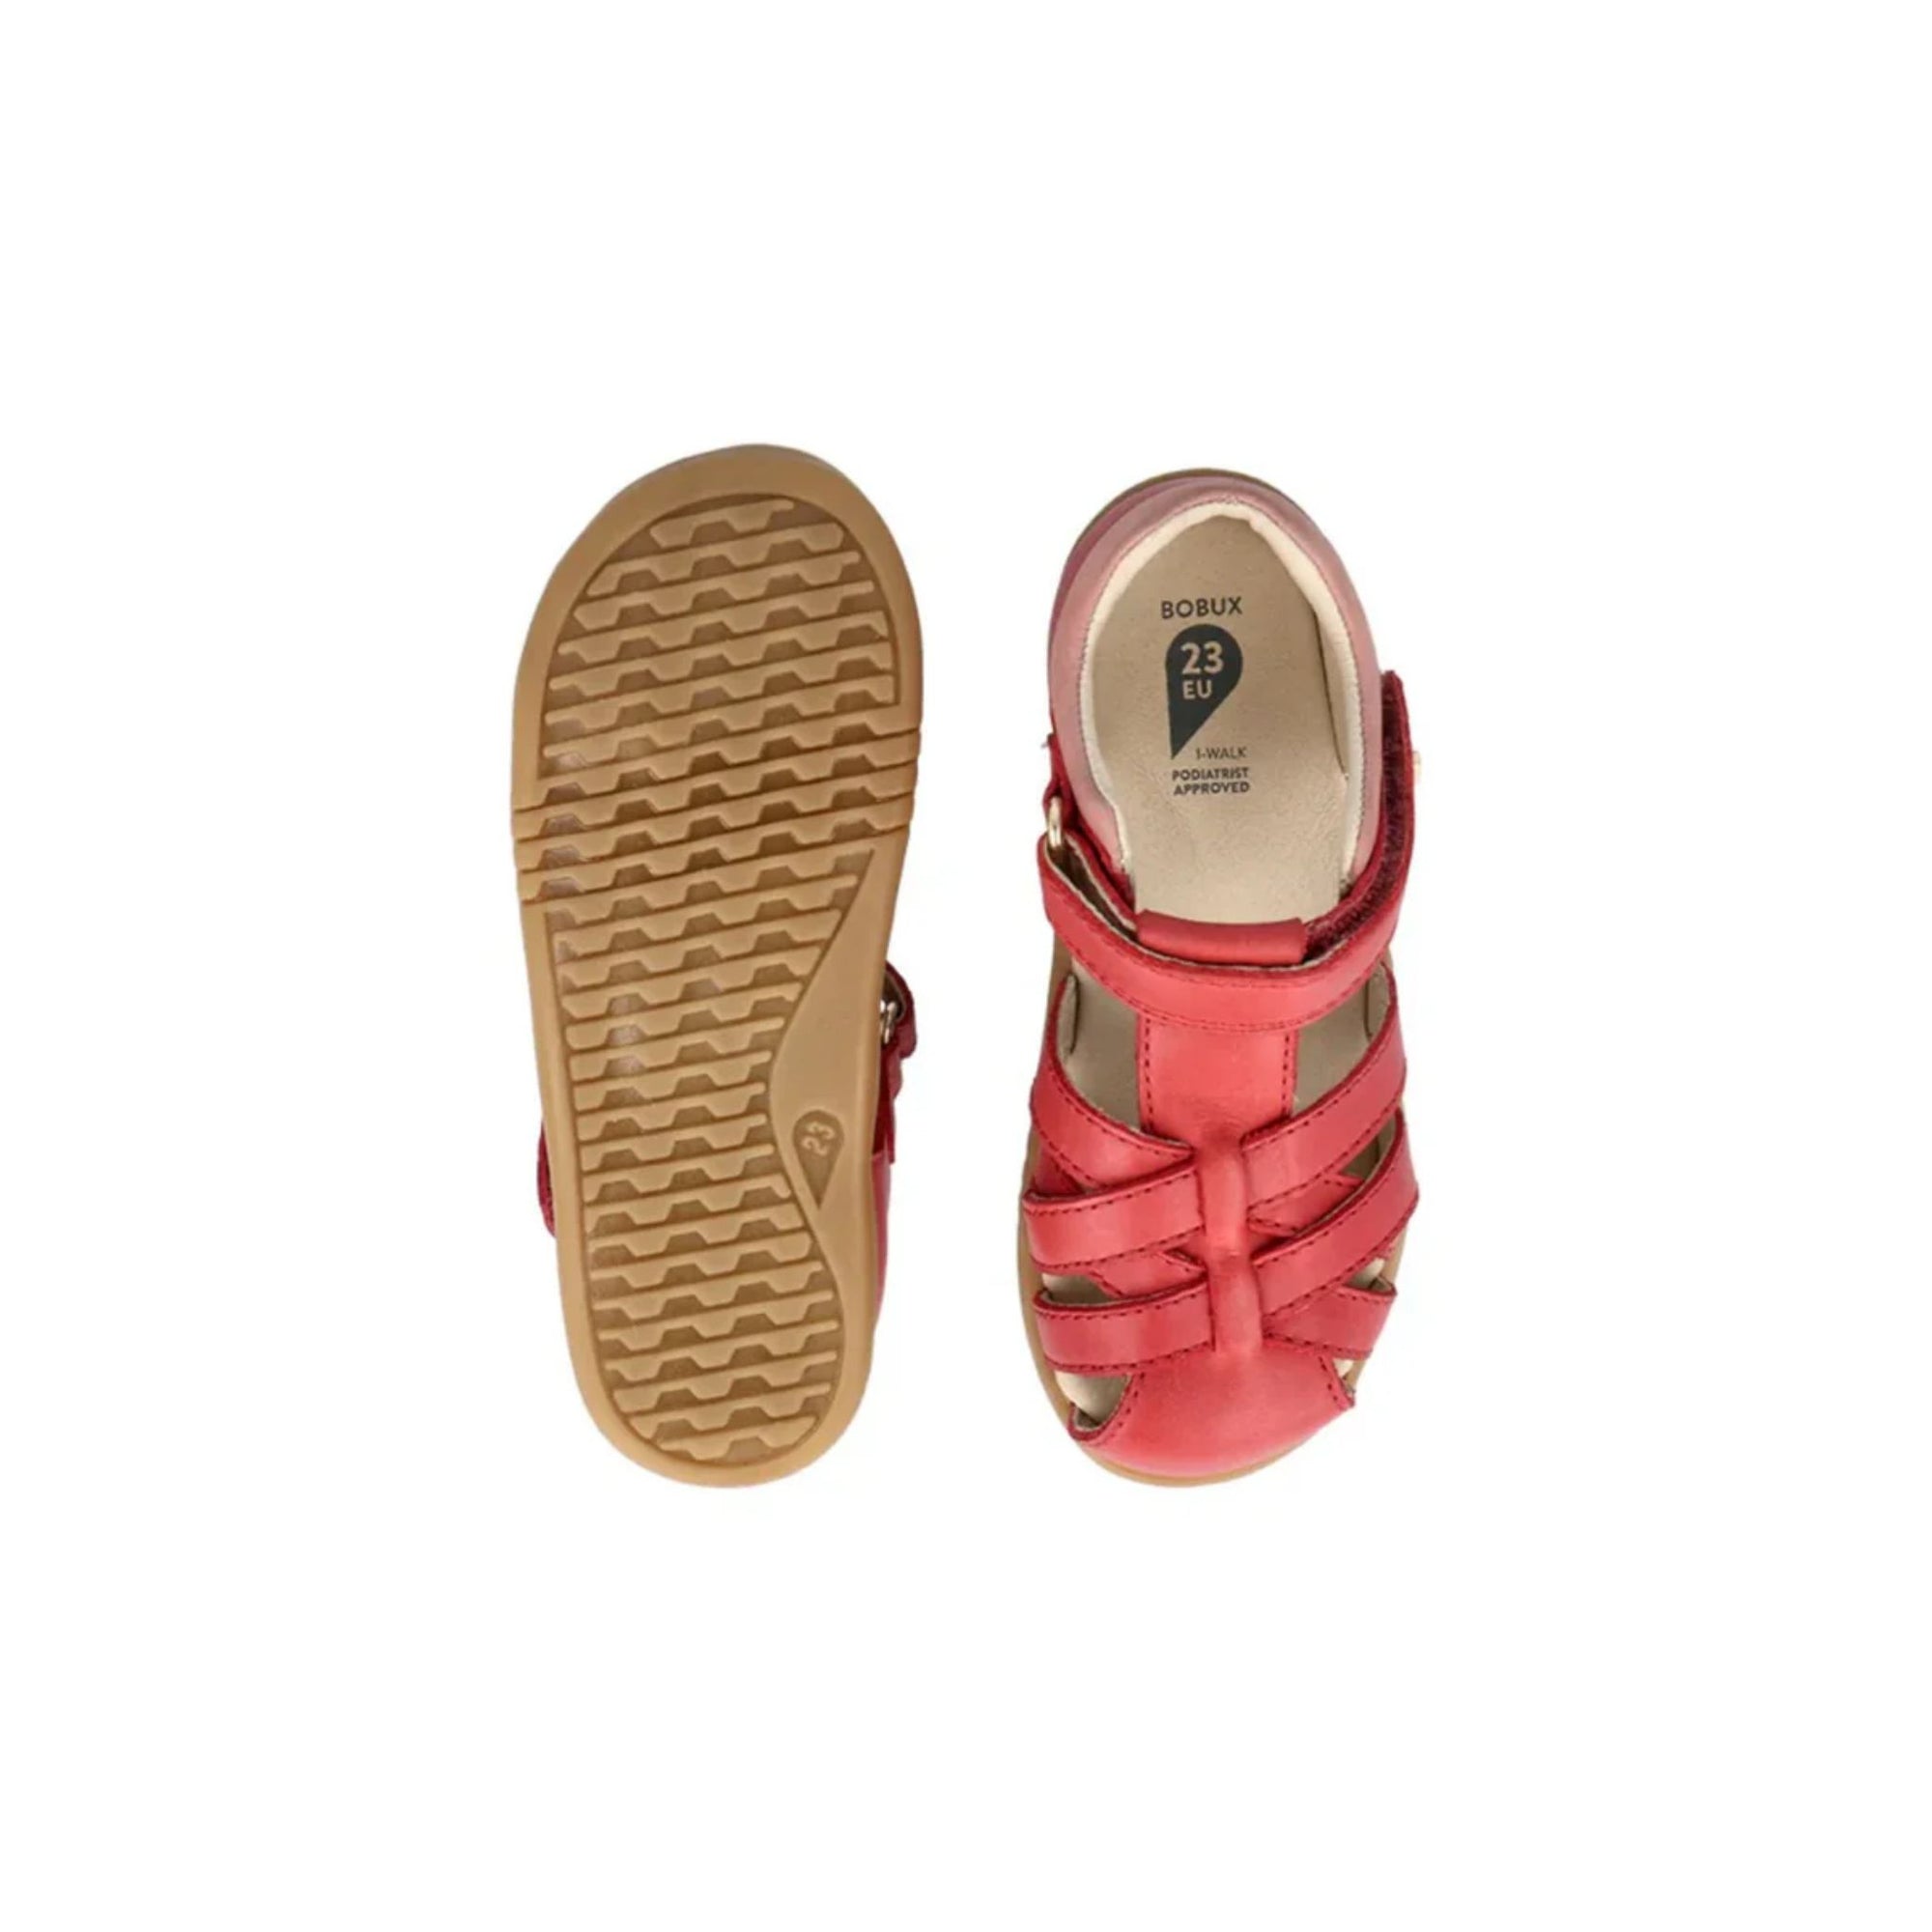 Mineral Red &amp; Rose Cross Jump Sandals i-Walk